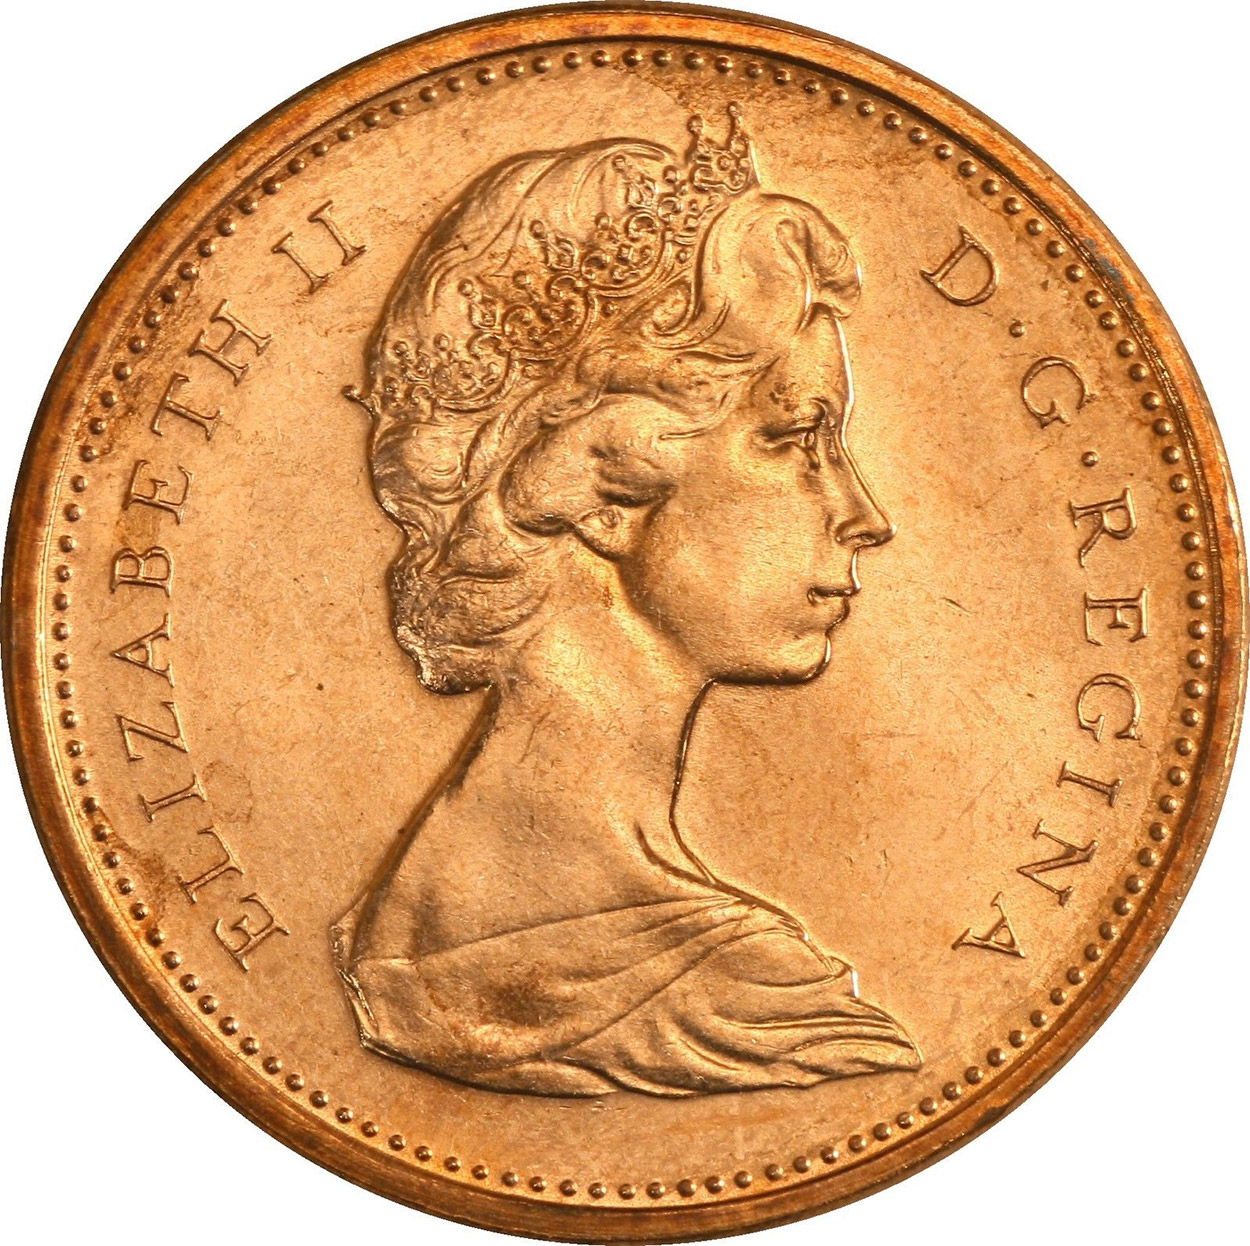 MS-60 - 1 cent 1965 to 1989 - Elizabeth II